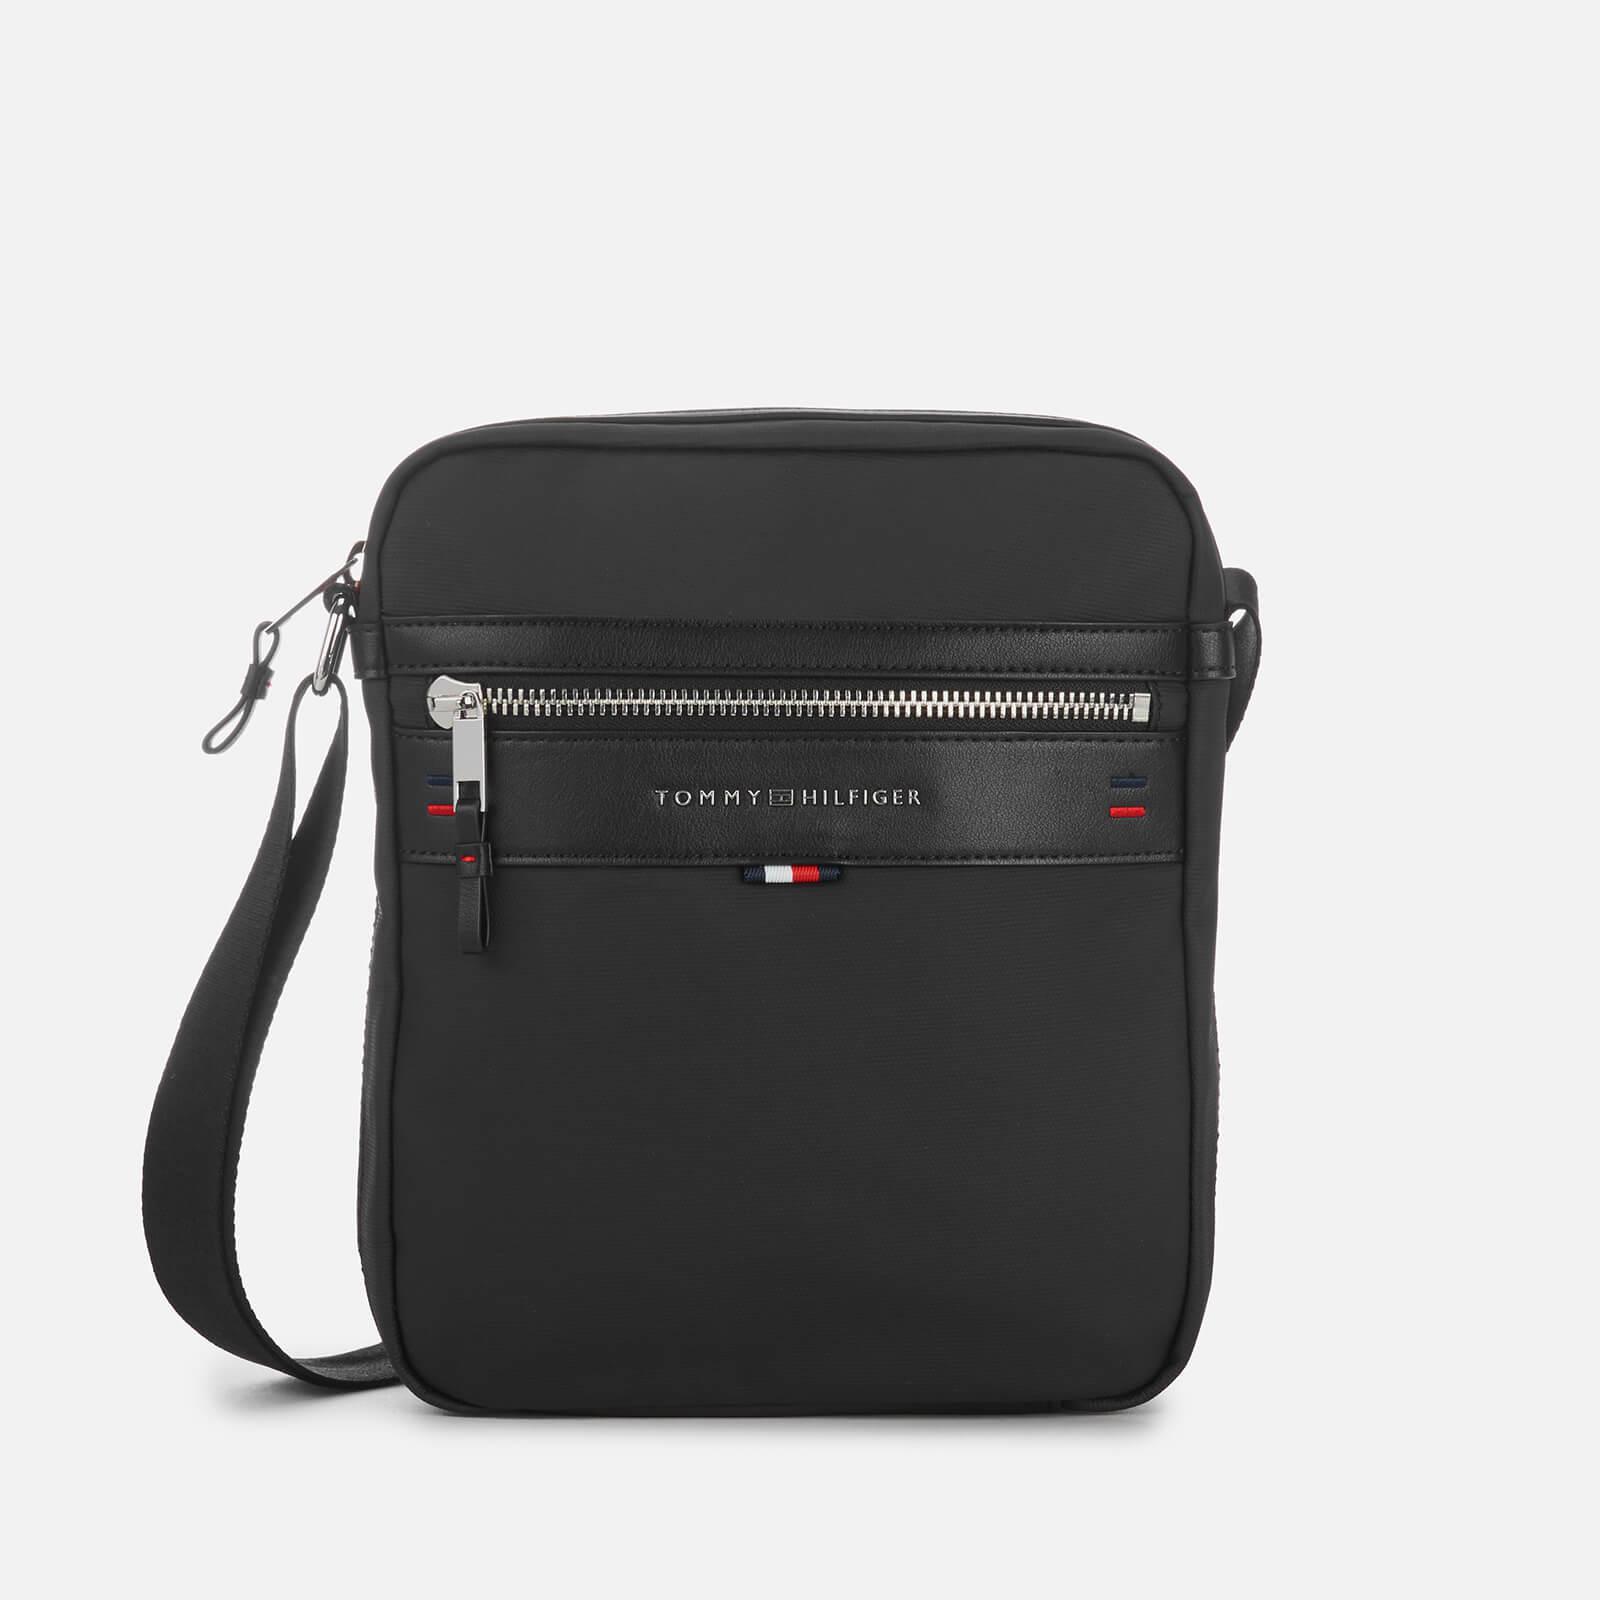 Tommy Hilfiger Leather Side Bag Dubai, SAVE 57% - mpgc.net